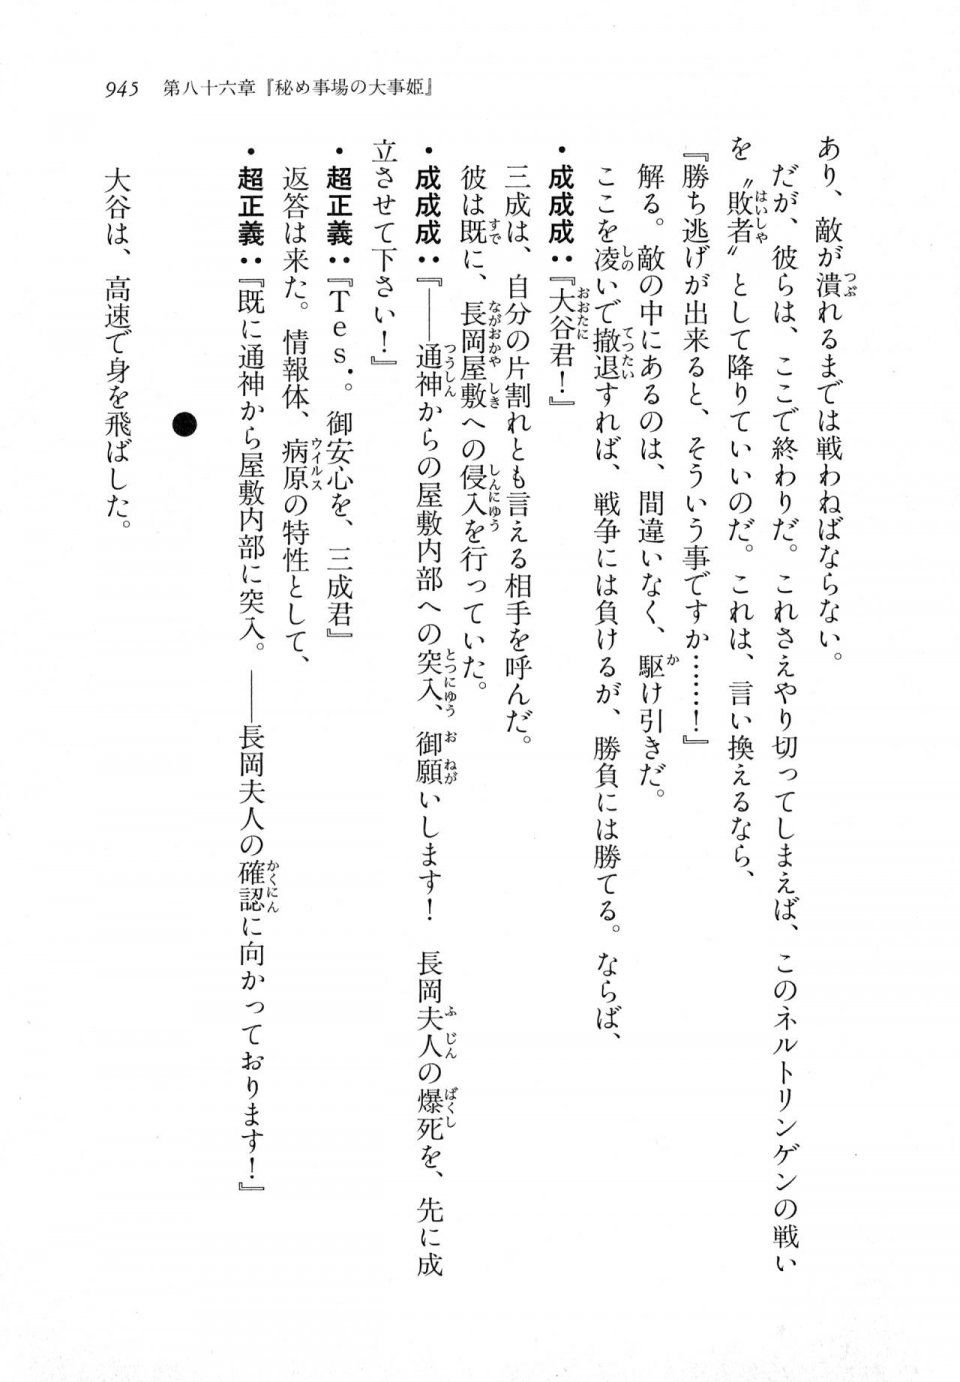 Kyoukai Senjou no Horizon LN Vol 18(7C) Part 2 - Photo #385